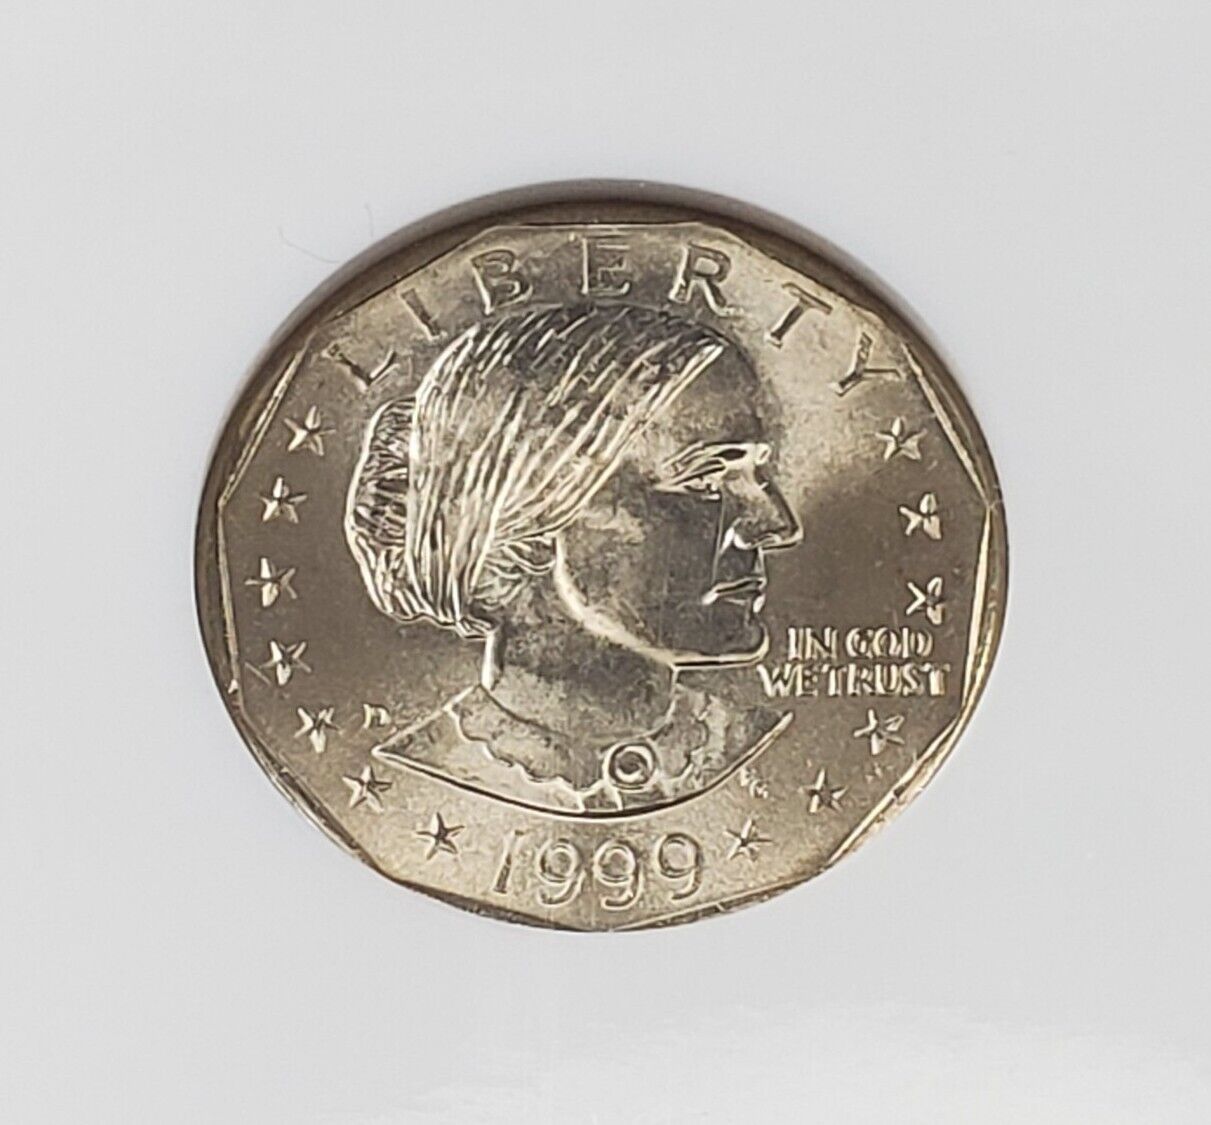 1999 D SBA $1 Susan B Anthony Small Size Dollar Coin NGC MS67 GEM BU Certified 2